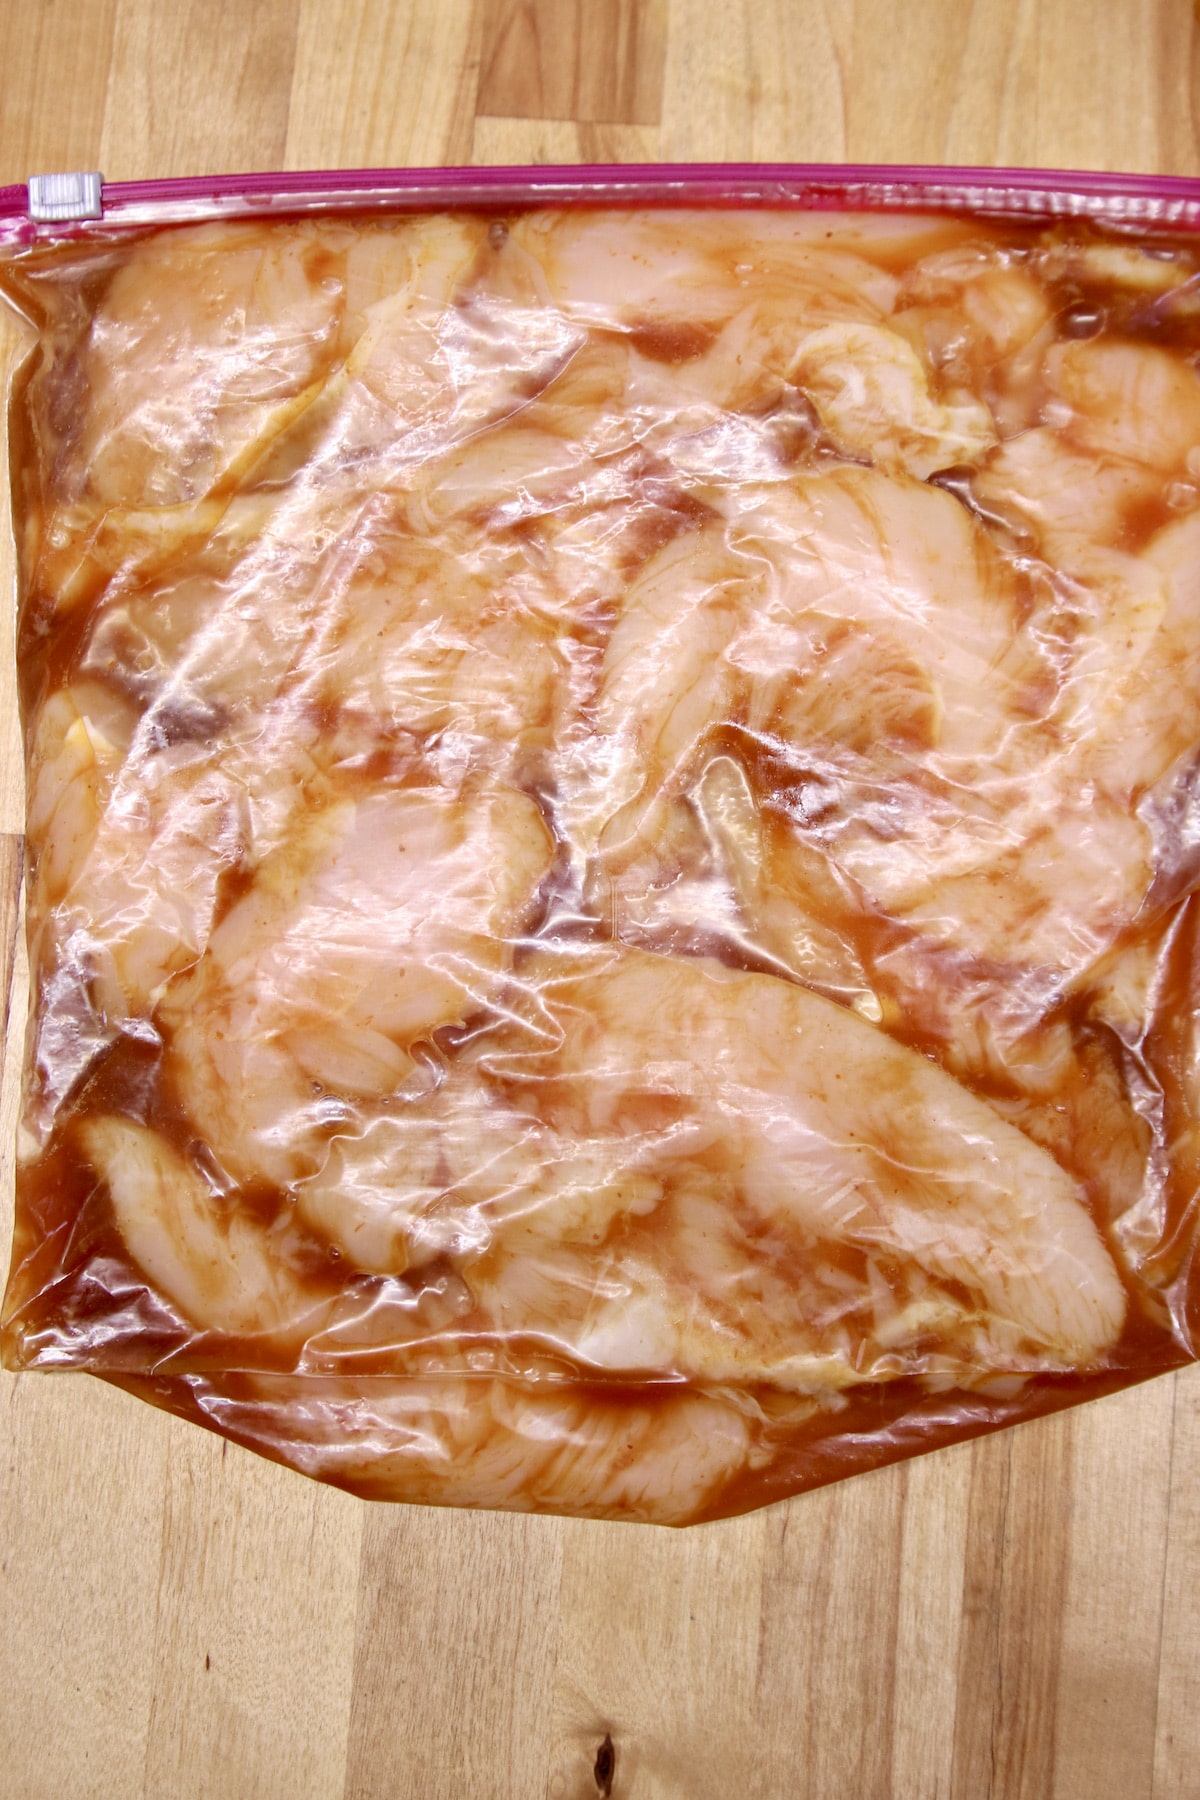 ziploc bag with marinating chicken tenders.